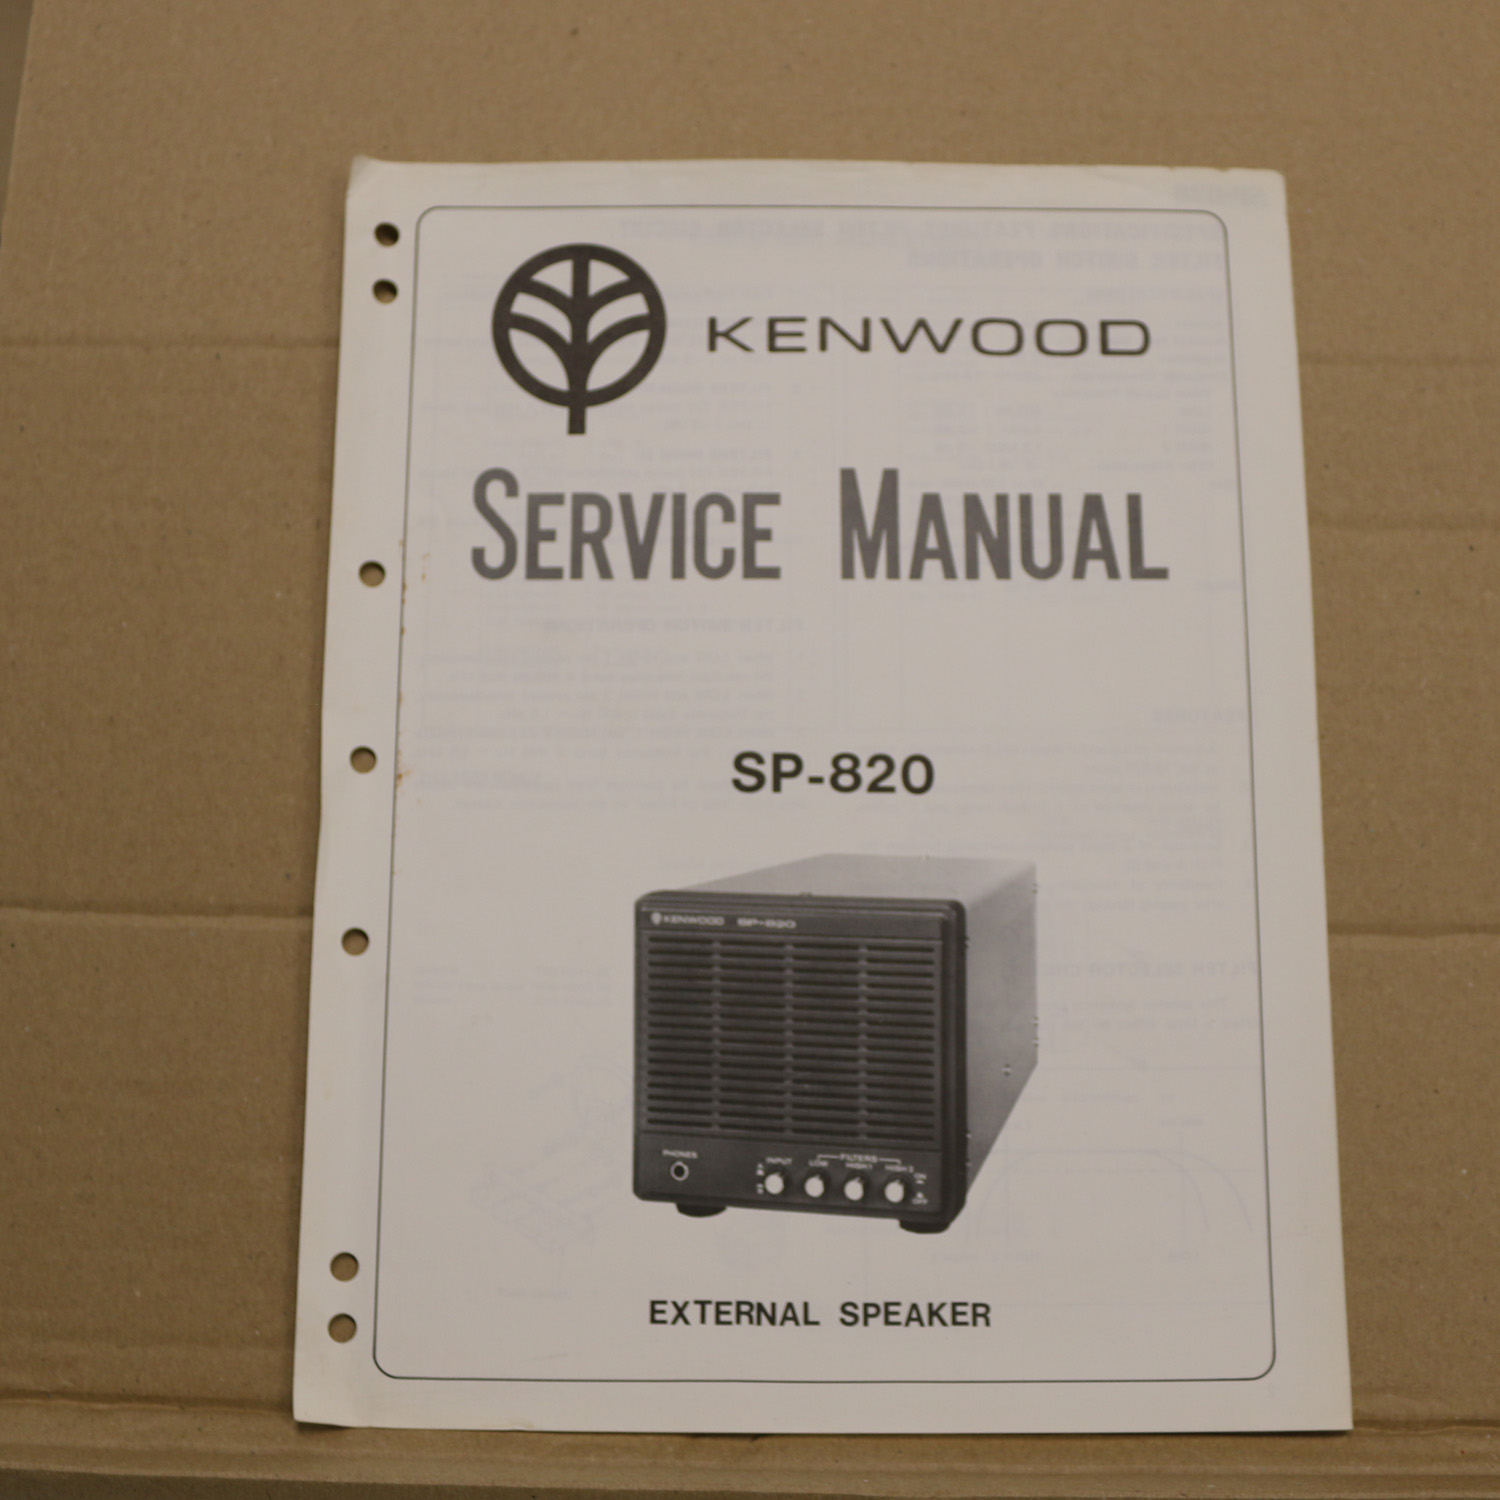 Kenwood SP-820 Service Manual